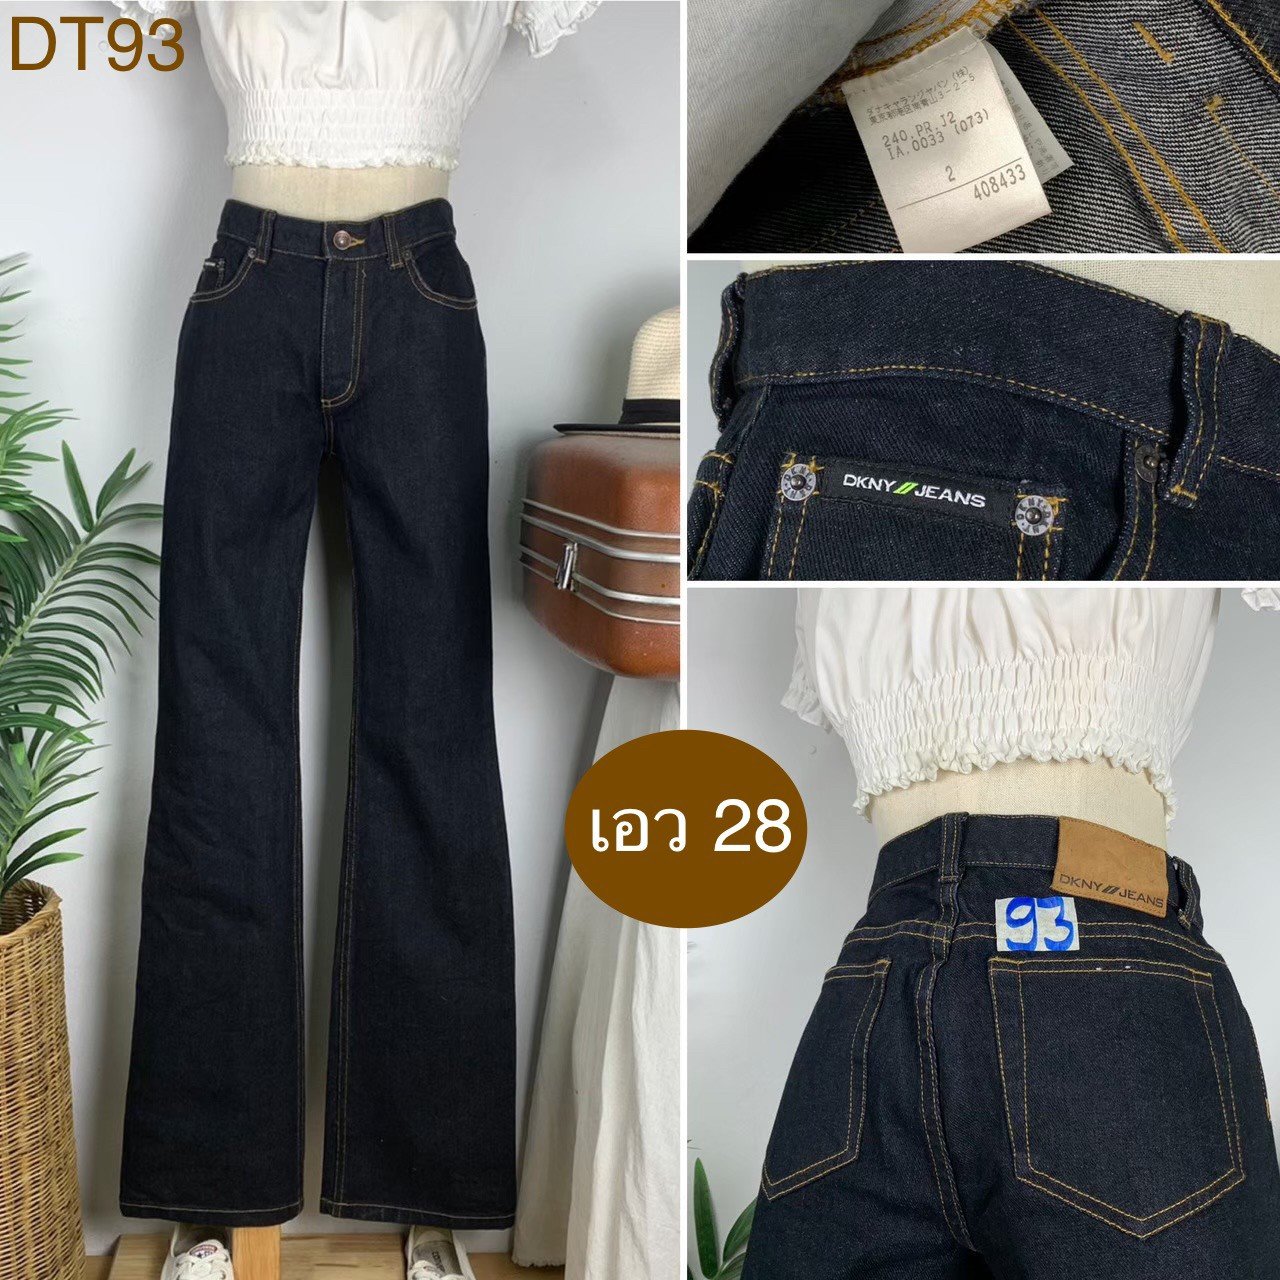 ♥️ รหัสDT93 ▪️ป้าย Dkny Jeans  ▪️ เอว 28" สะโพก 36" ต้นขา 20" ▪️เป้า 9" ยาว 42.5" ปลายขา 8.5" (นิ้ว)